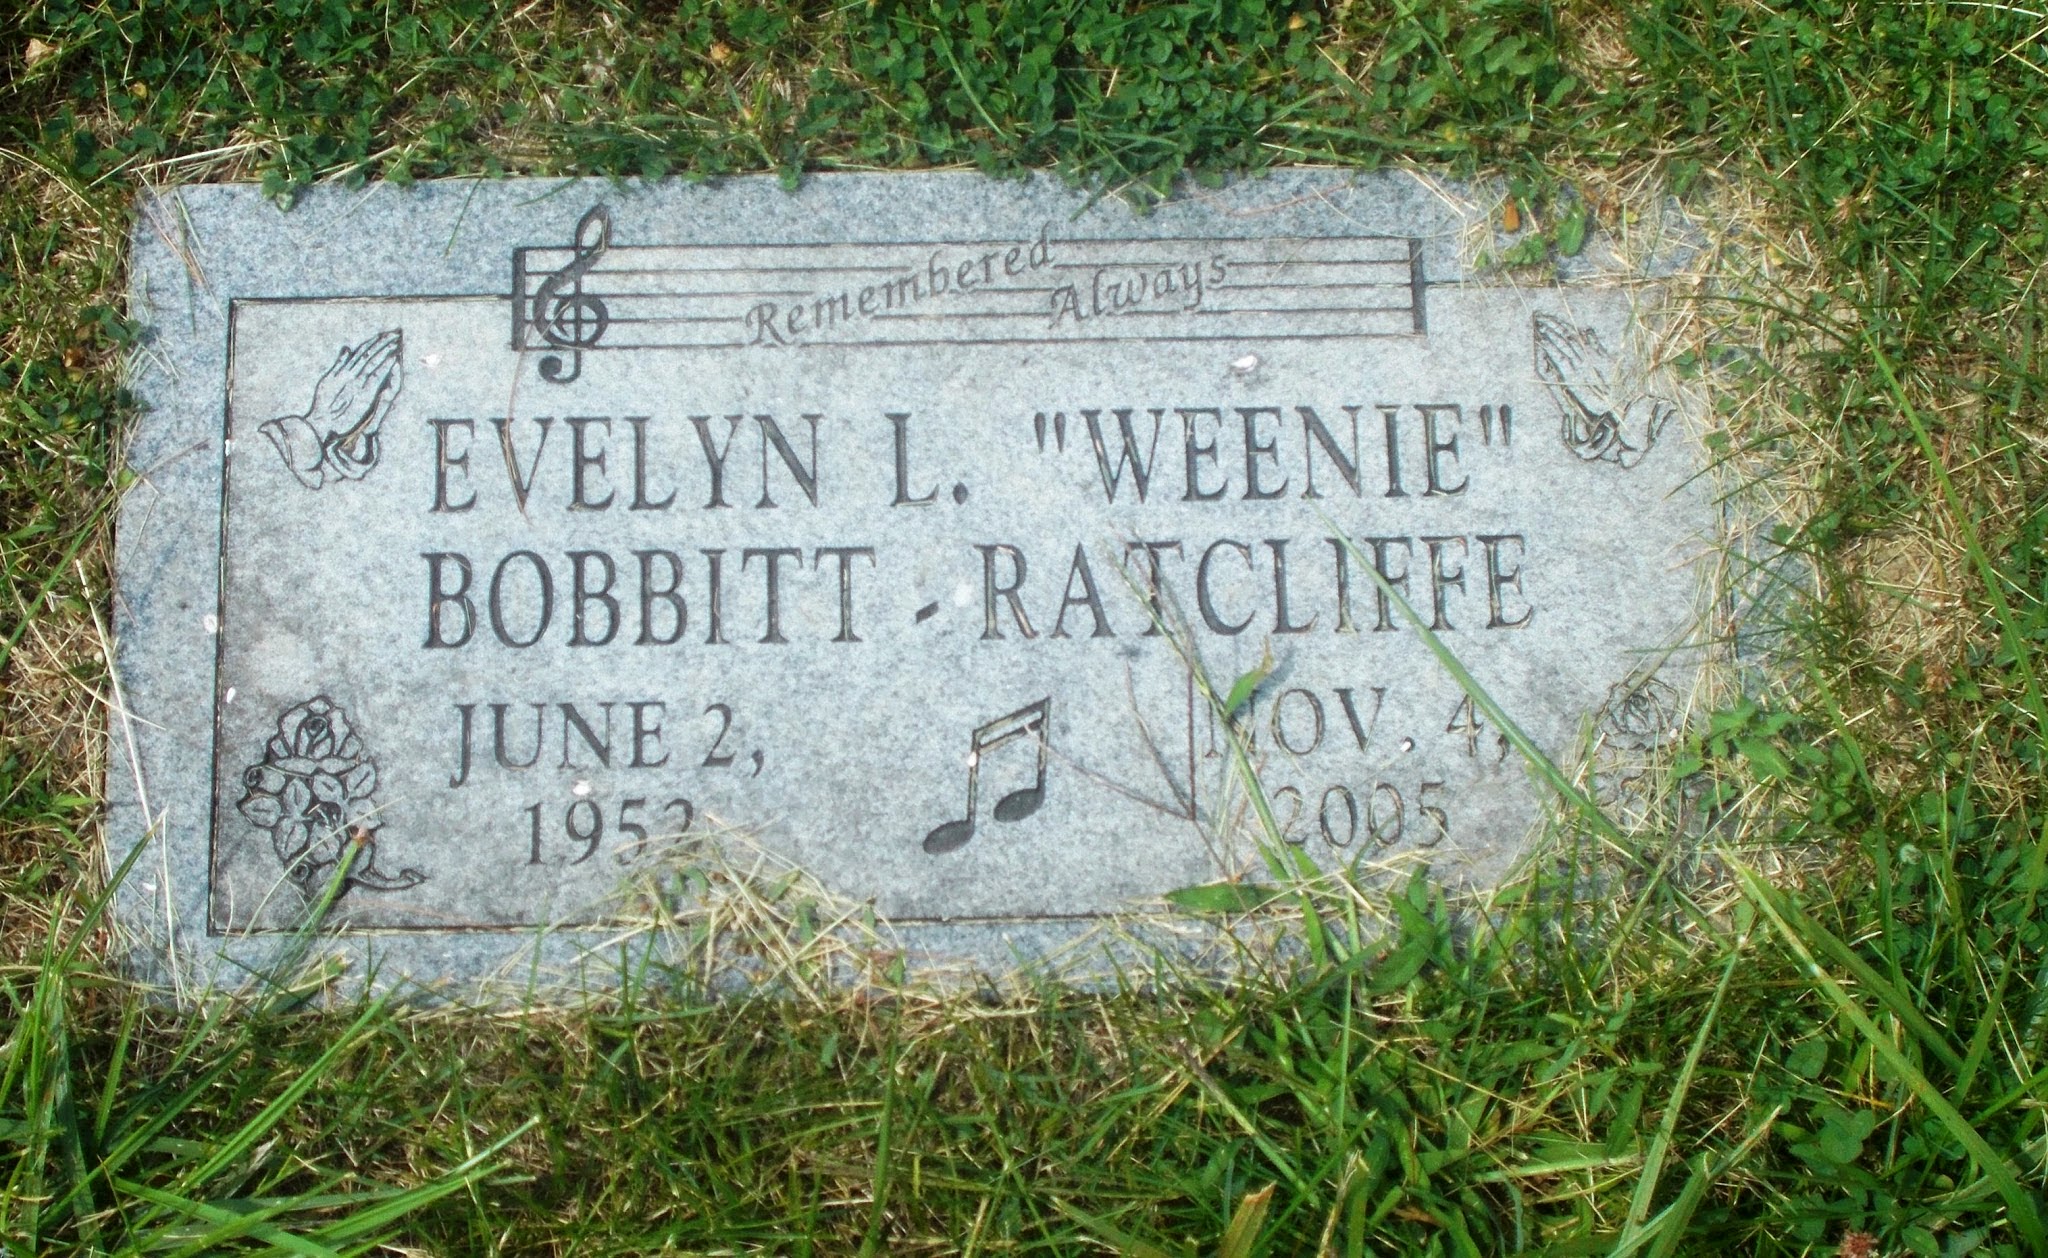 Evelyn L "Weenie" Bobbitt Ratcliffe